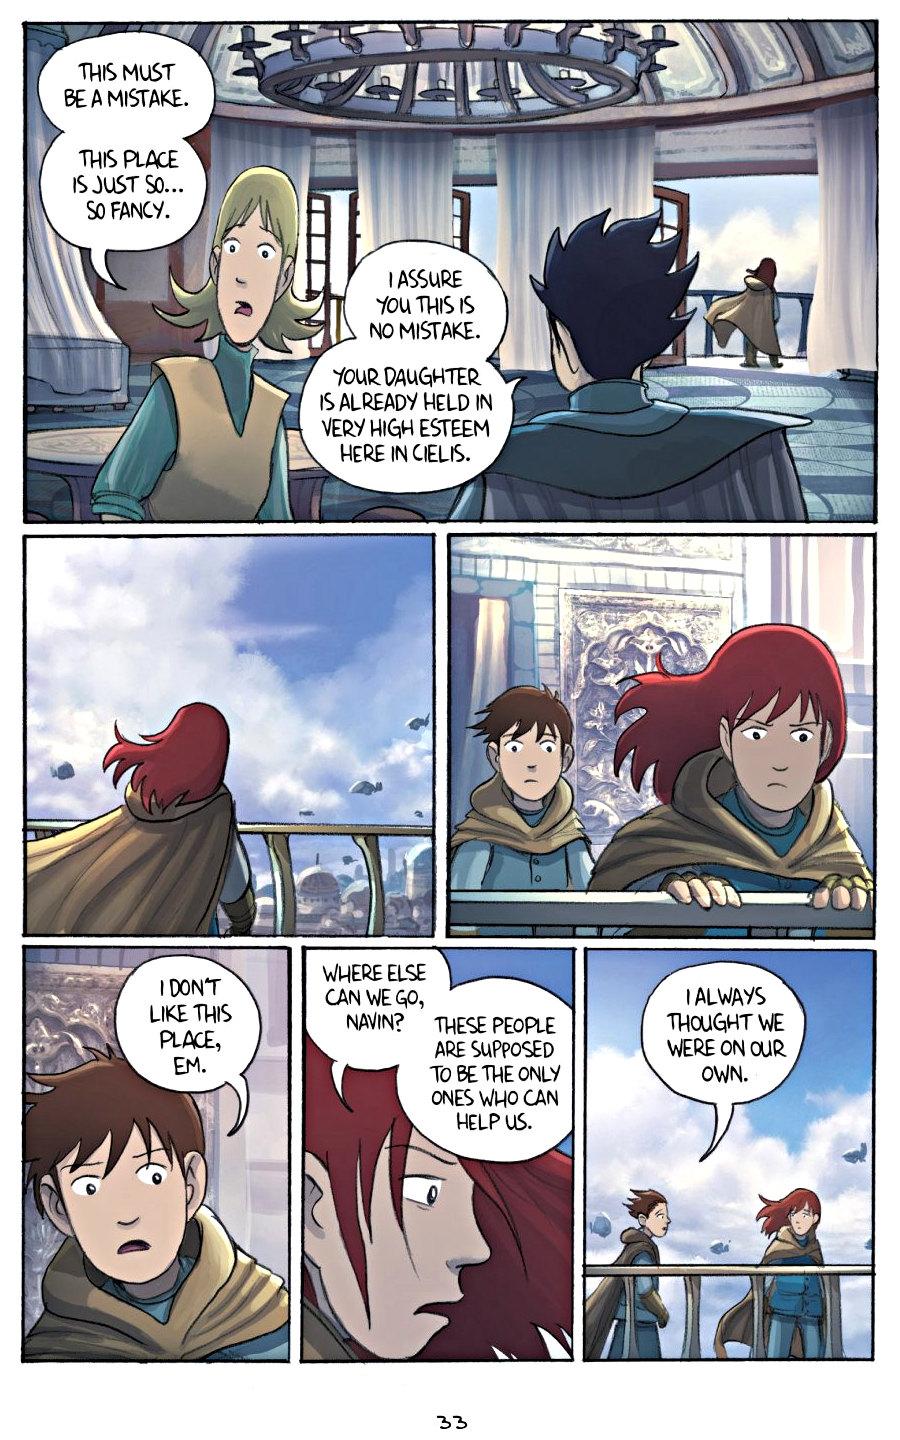 page 33 of amulet 4 last council graphic novel by kazu kibuishi